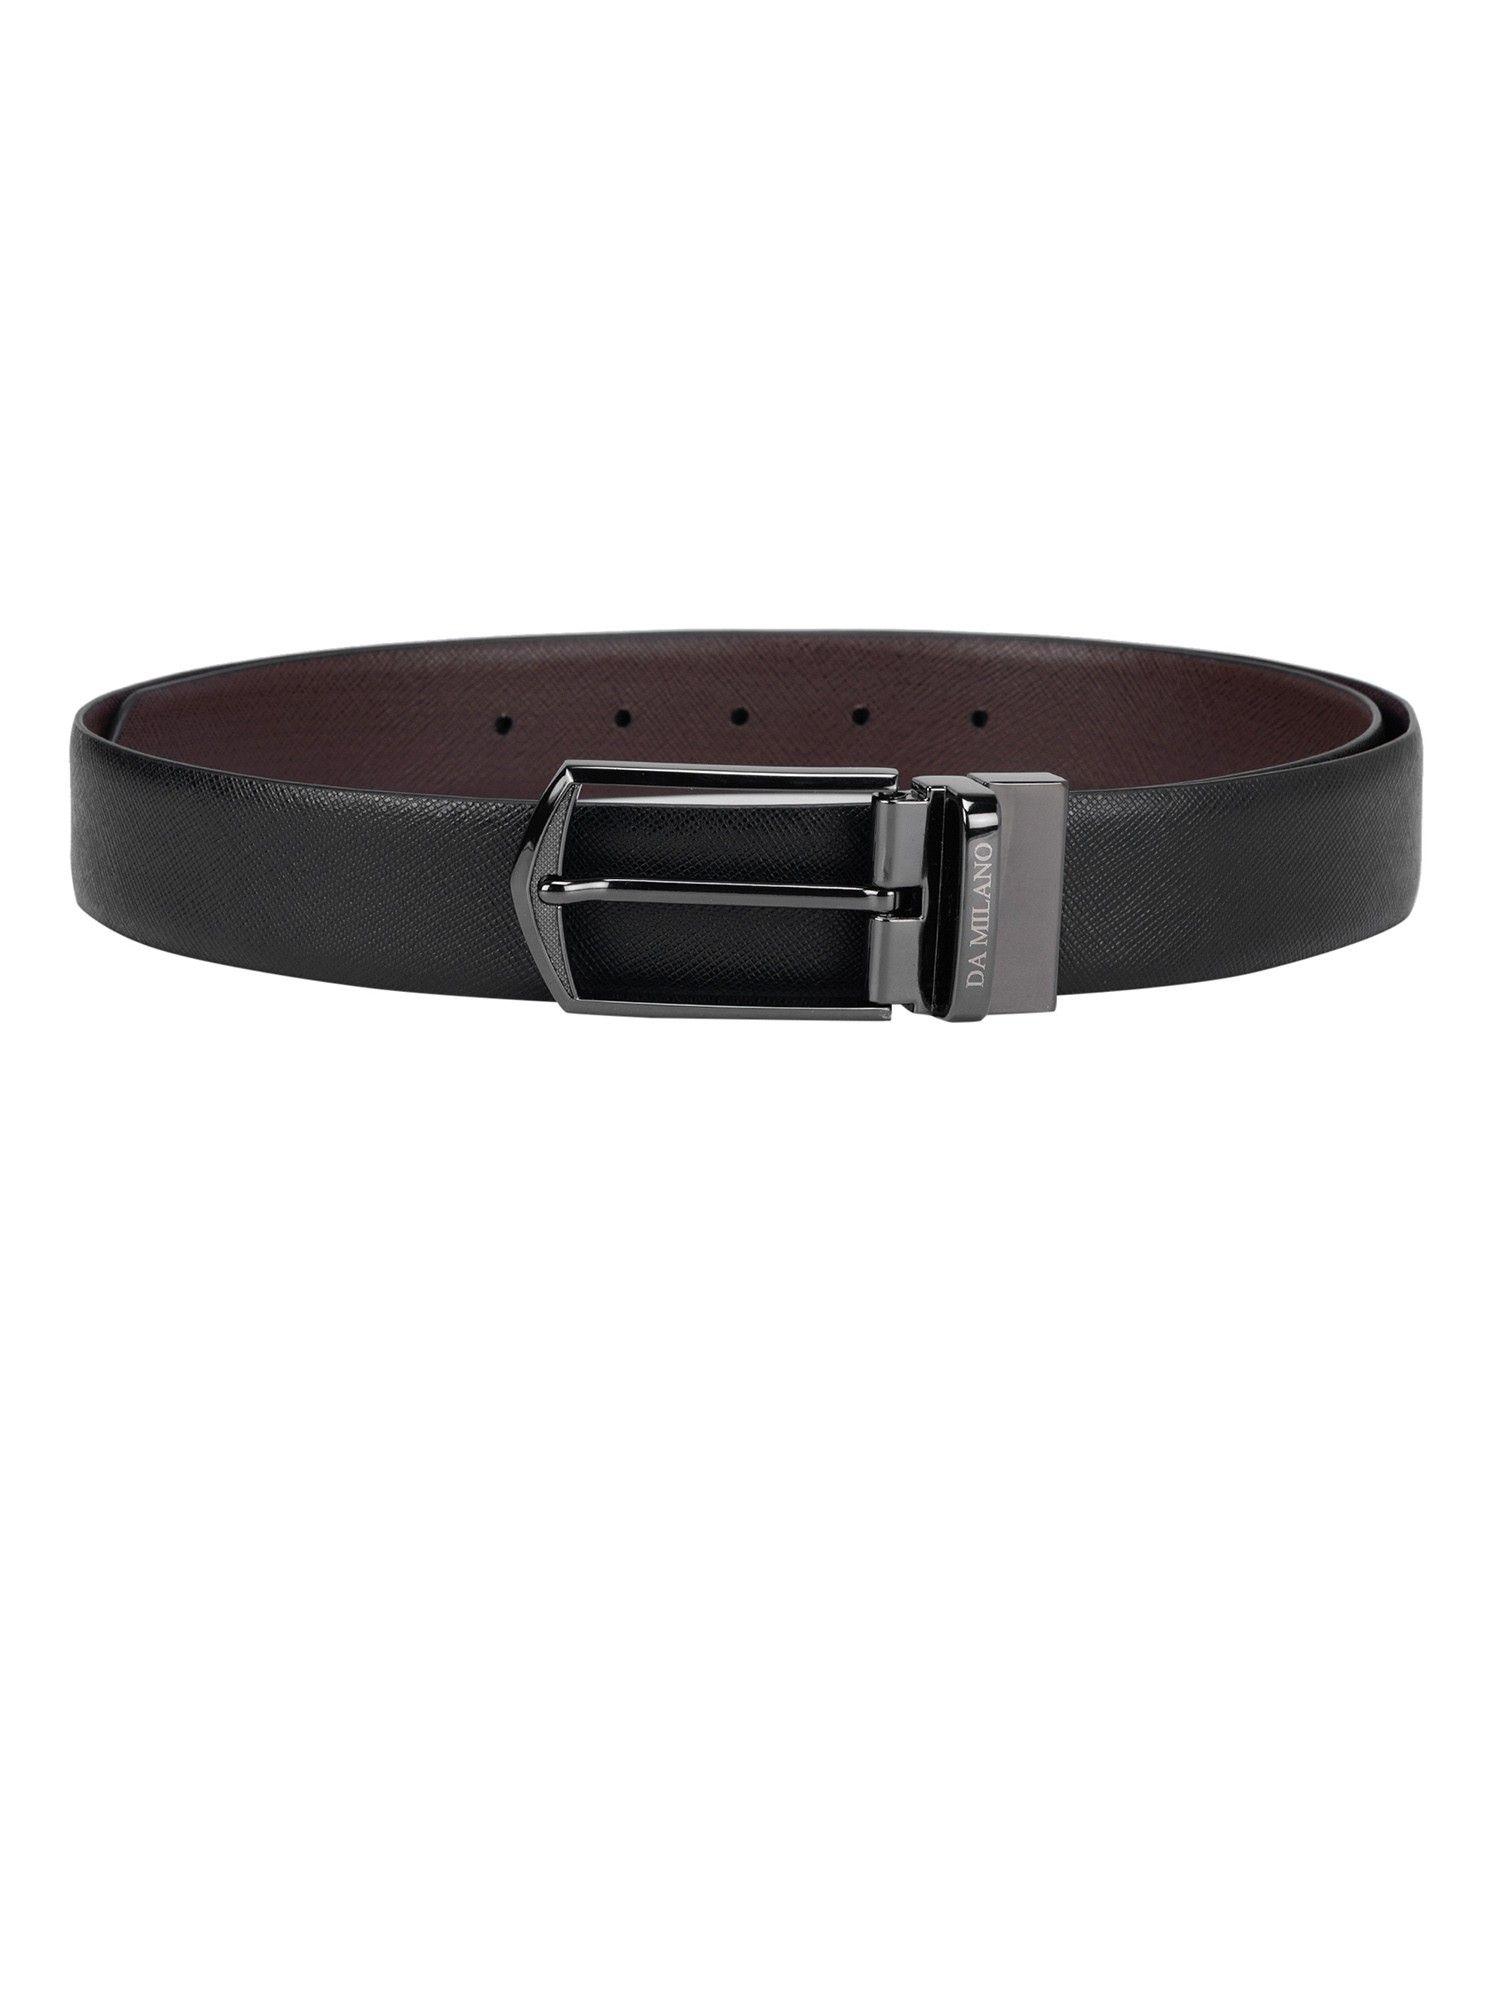 textured leather black & brown reversible belt bm-3284-35r-olsaffiano